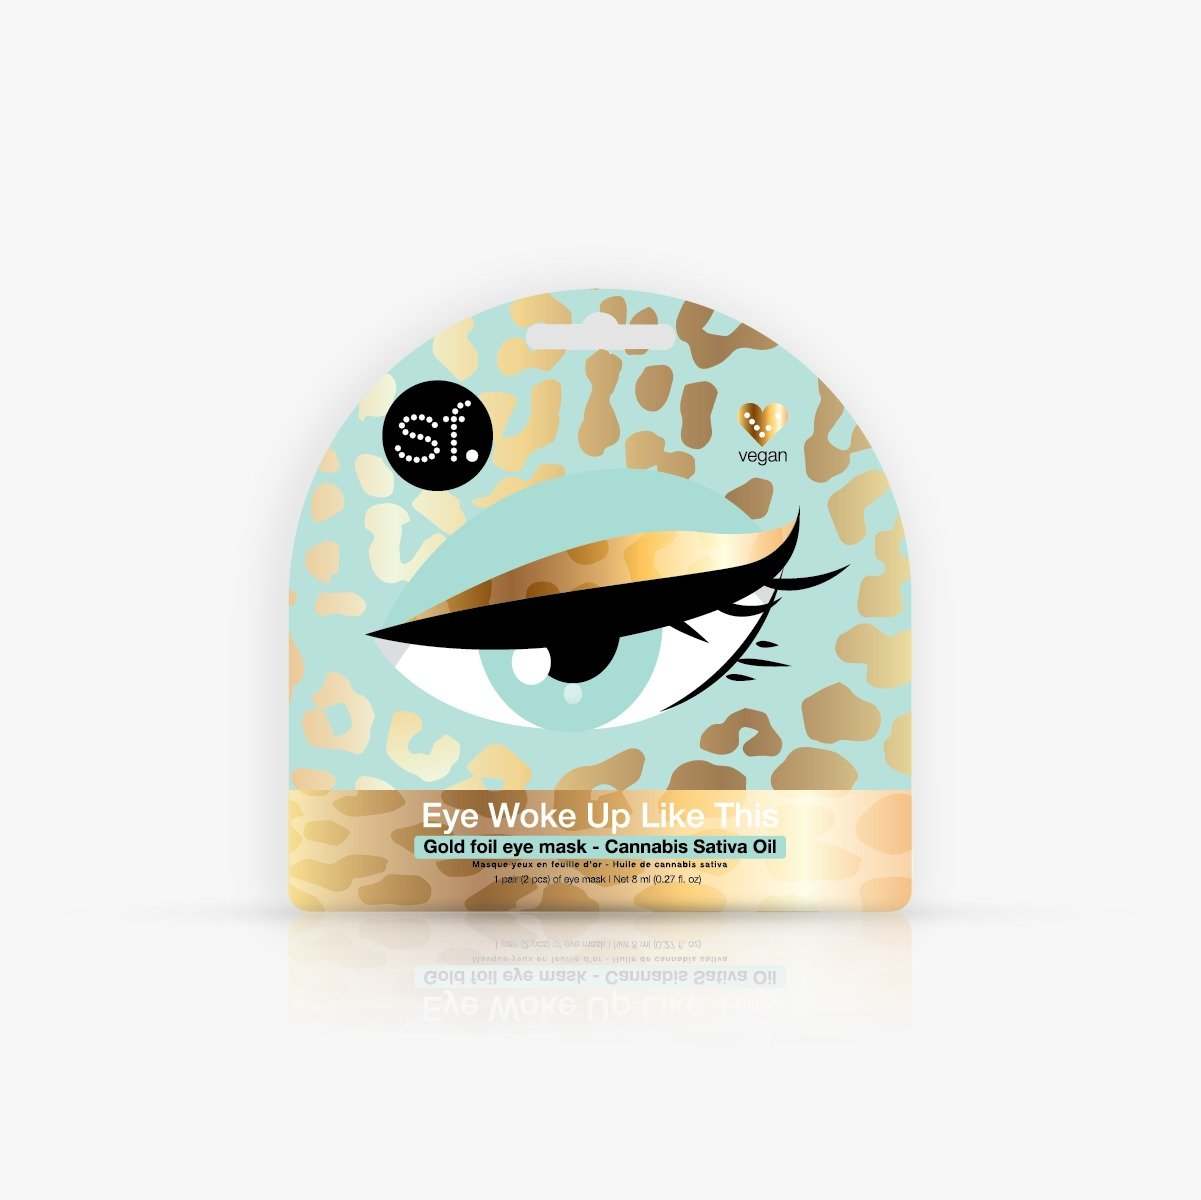 Eye Woke Up Like This - Sativa - Gold Foil Eye Mask - Maskscara